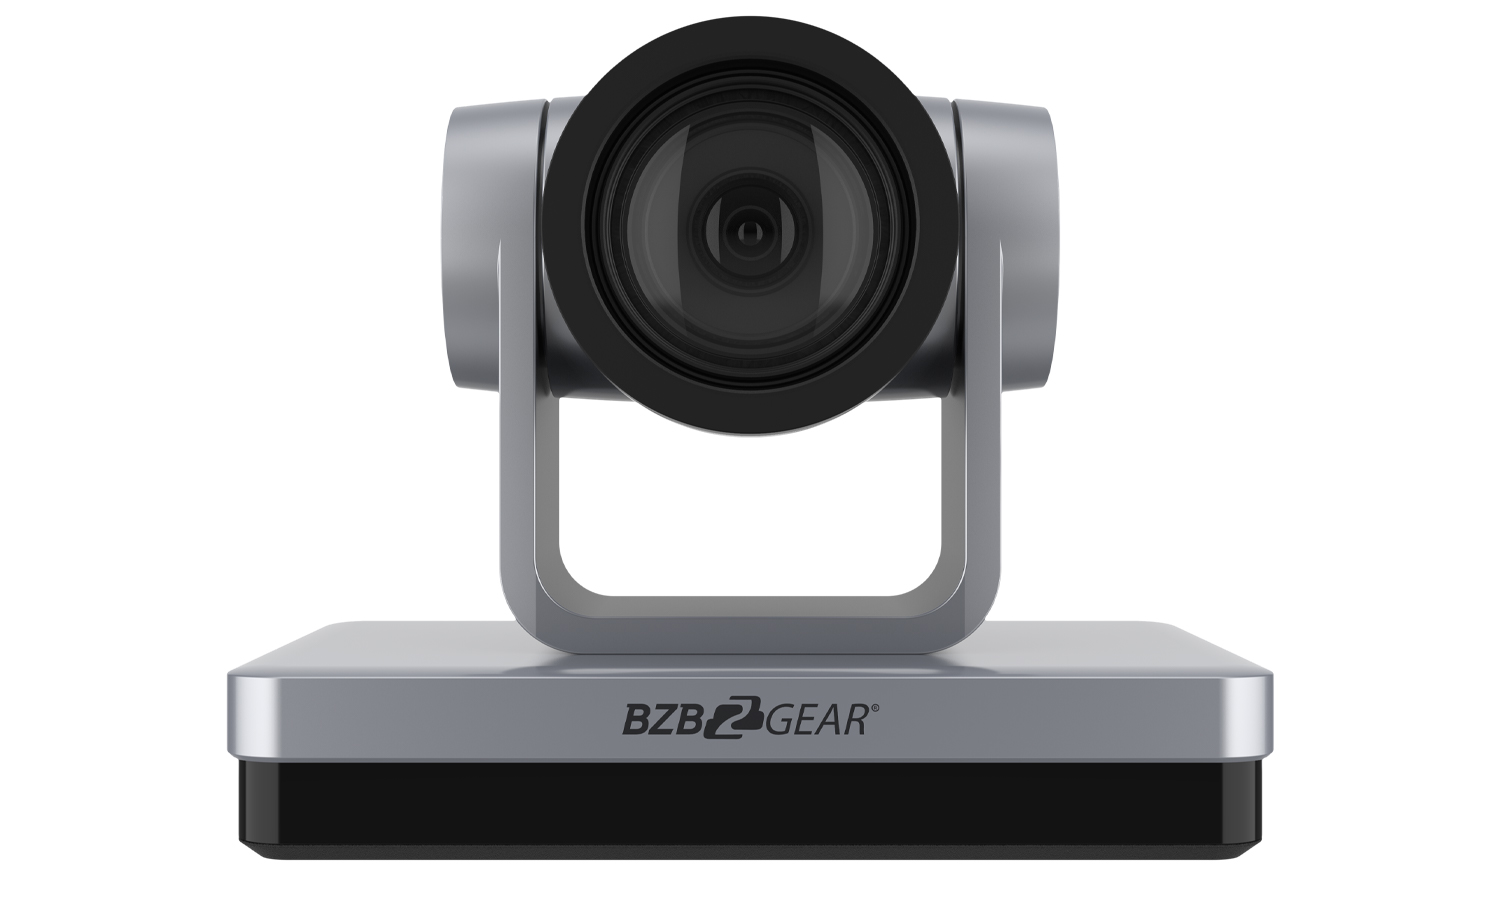 BG-UPTZ-20XHSU-S Universal 1080P FHD PTZ 20X HDMI/SDI/USB 3.0 RS232/485 Live Streaming Camera (Silver) by BZBGEAR